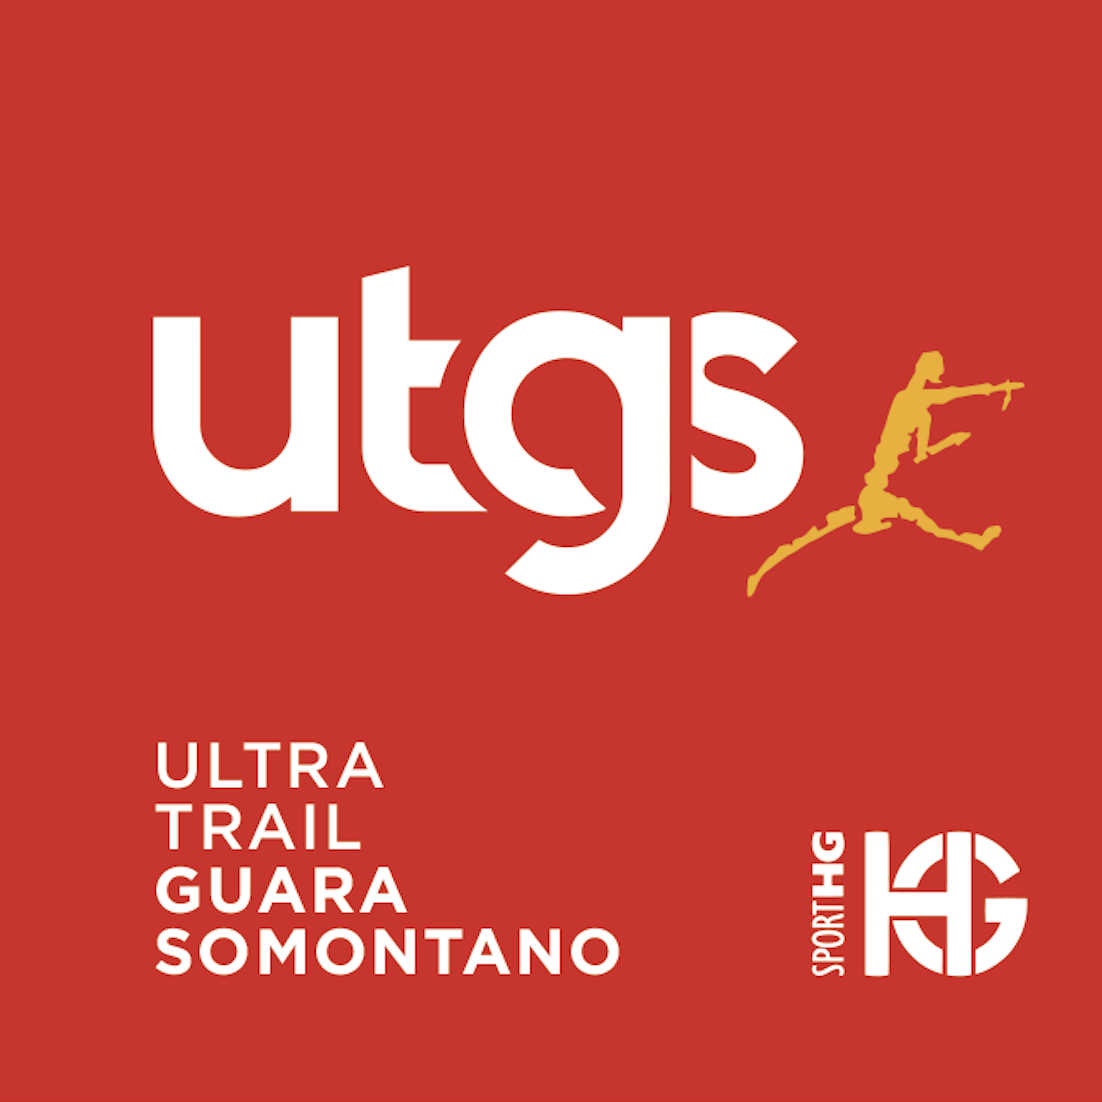 Ultra Trail Guara Somontano